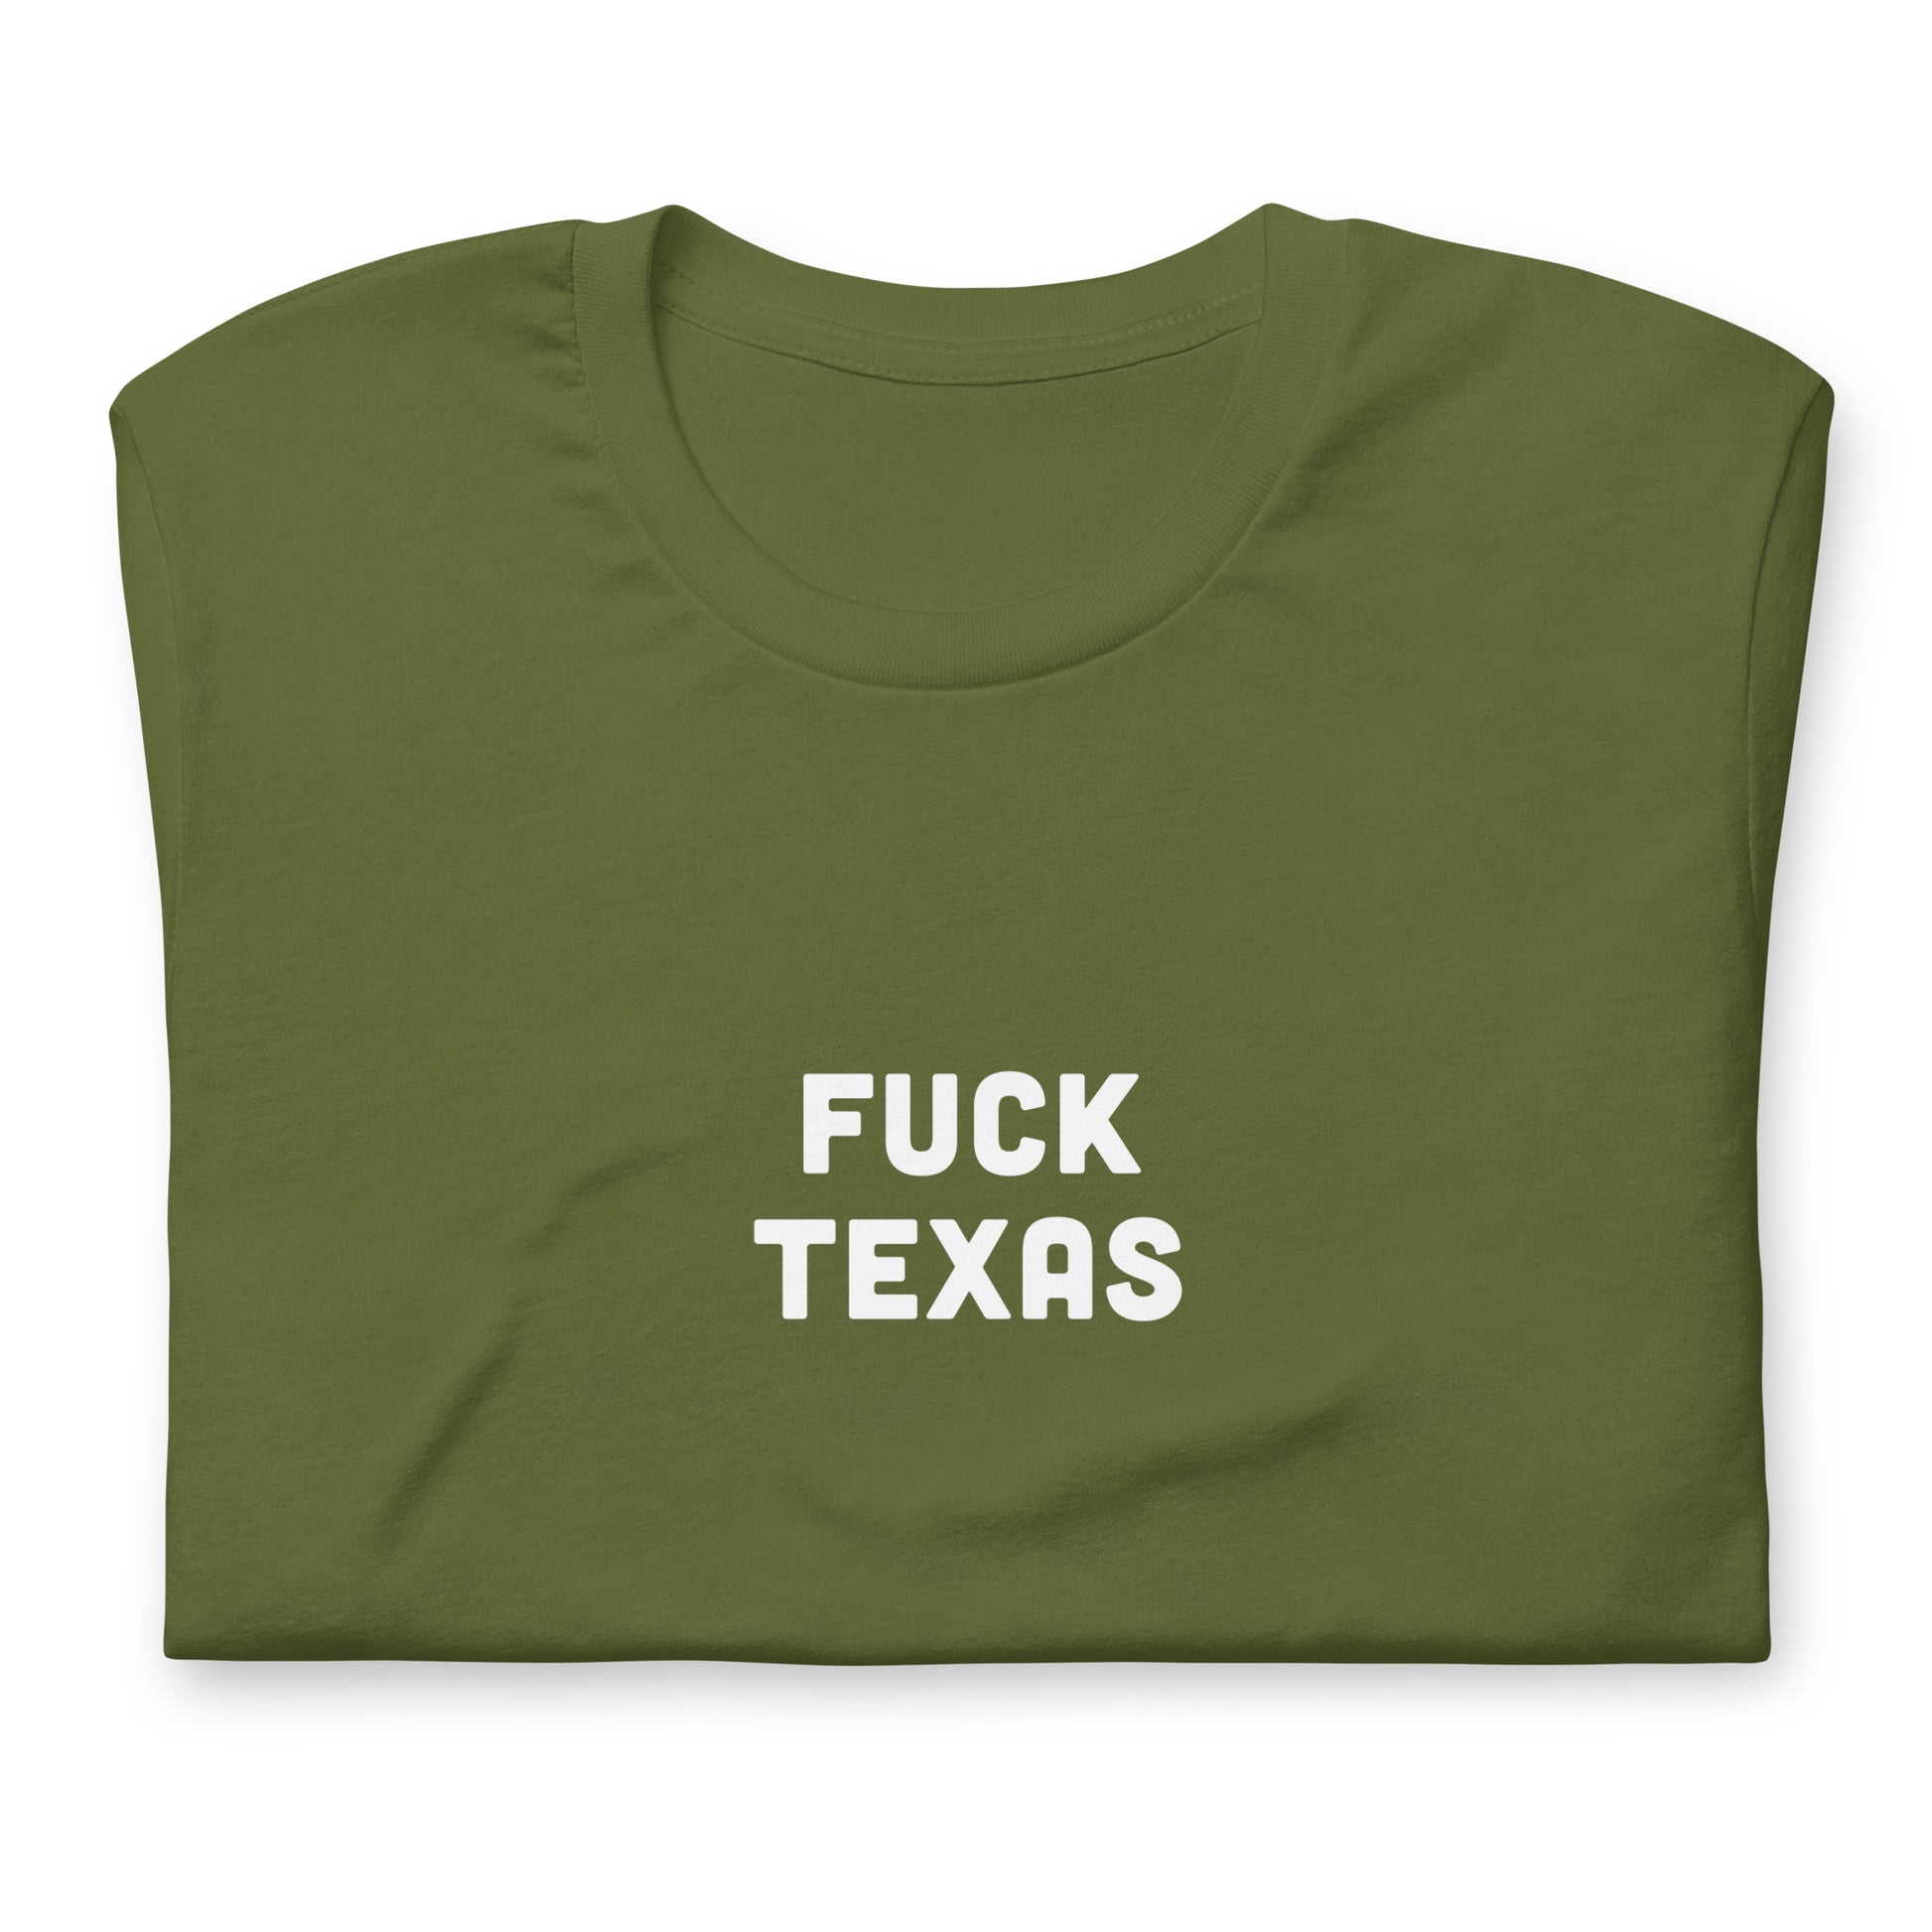 Fuck Texas T-Shirt Size XL Color Navy